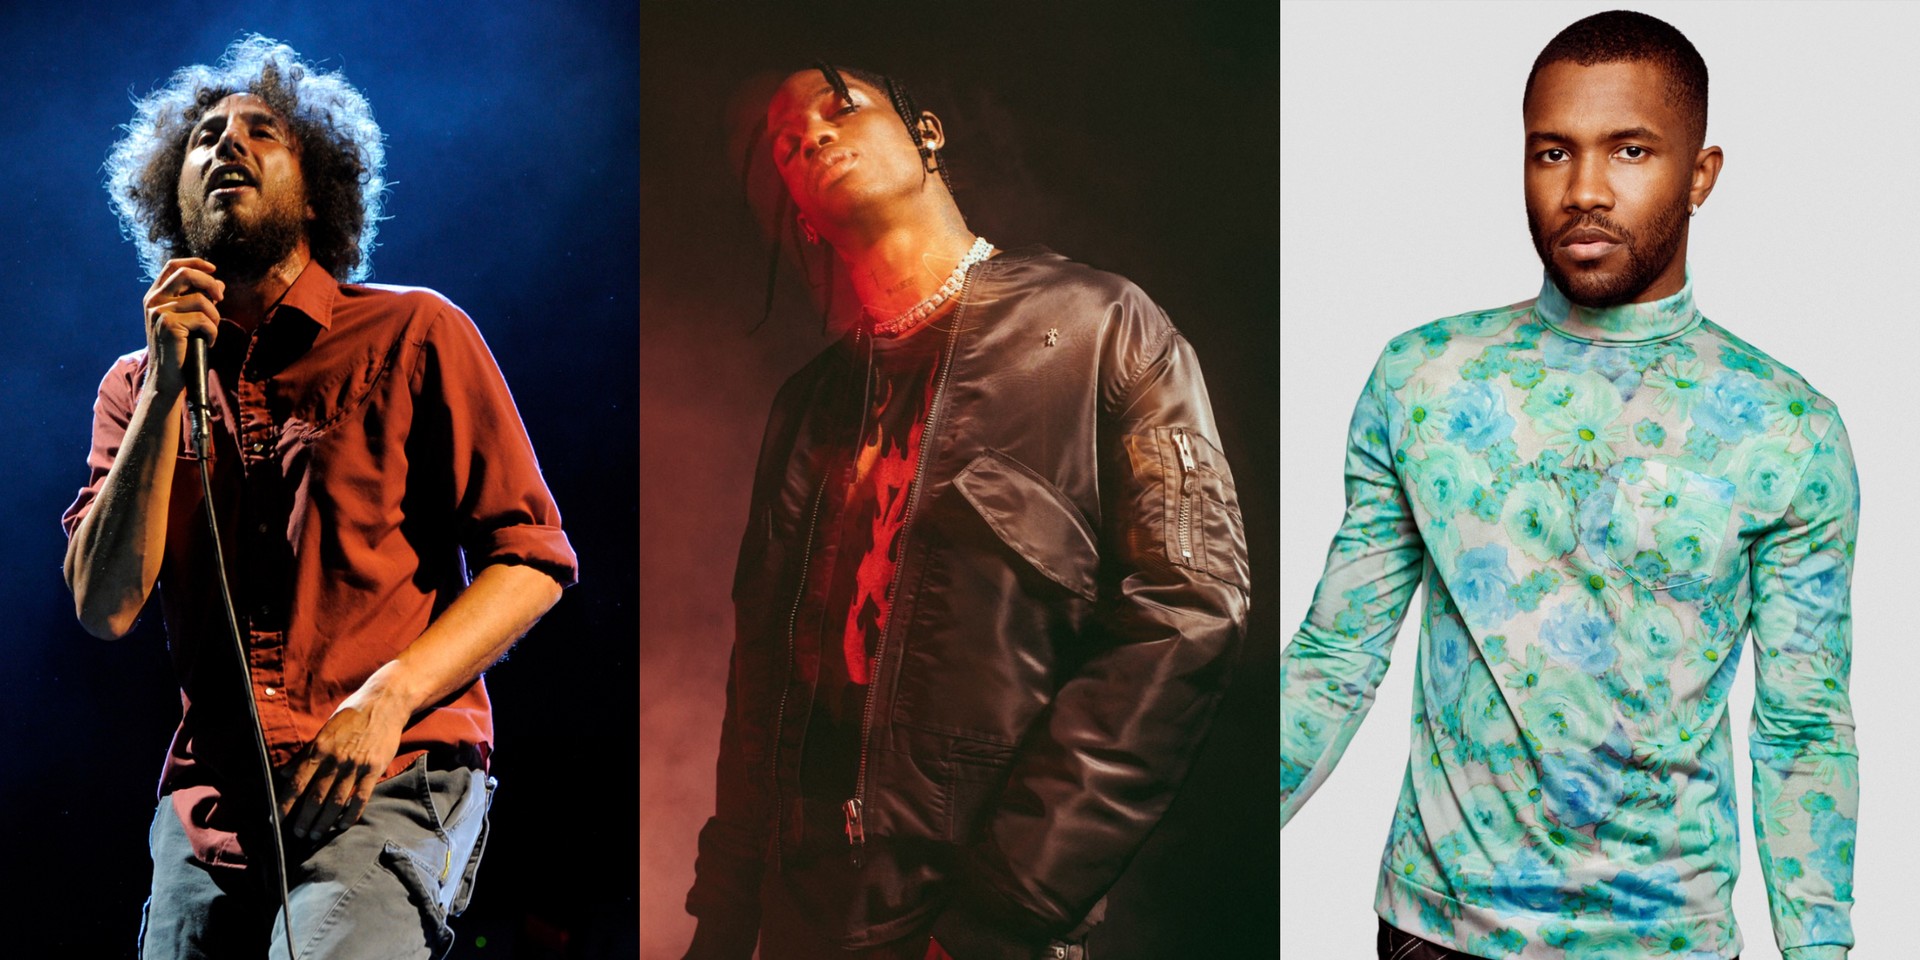 Coachella 2020 line-up announced – Rage Against The Machine, Travis Scott, and Frank Ocean to headline